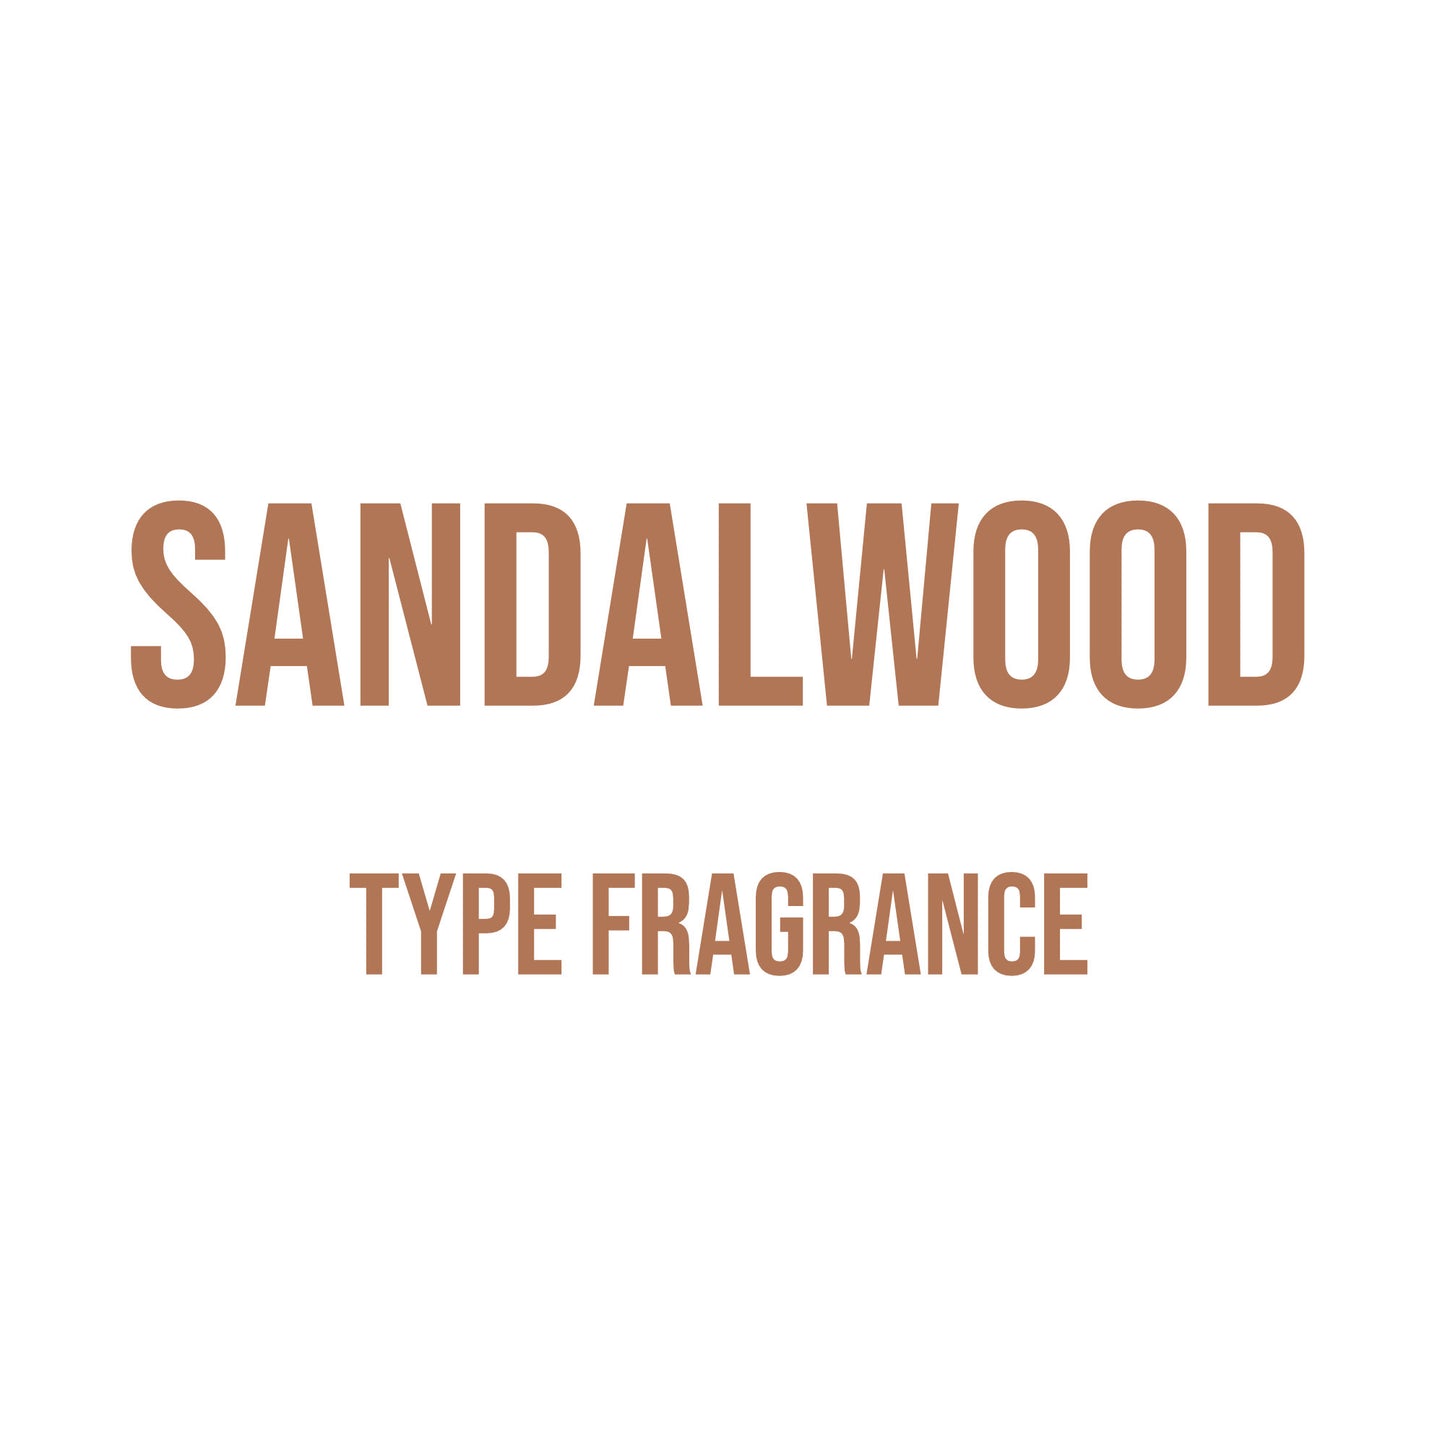 Sandalwood Type Fragrance